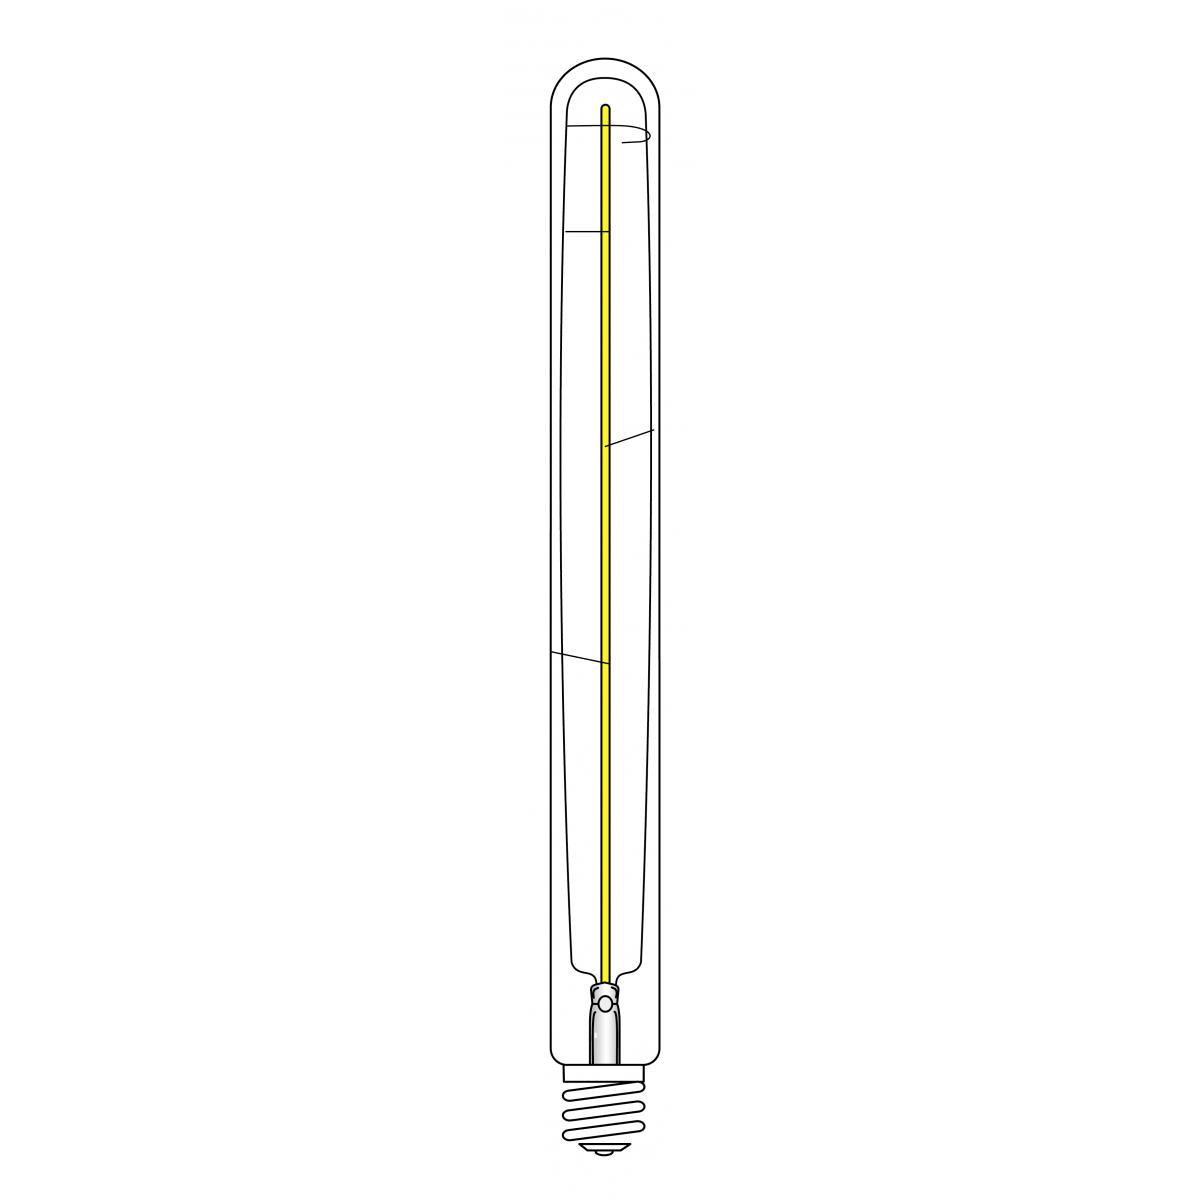 LED T9 Single Tube Bulb, 7 Watt, 620 Lumens, 2000K, E26 Medium Base, Amber Finish - Bees Lighting